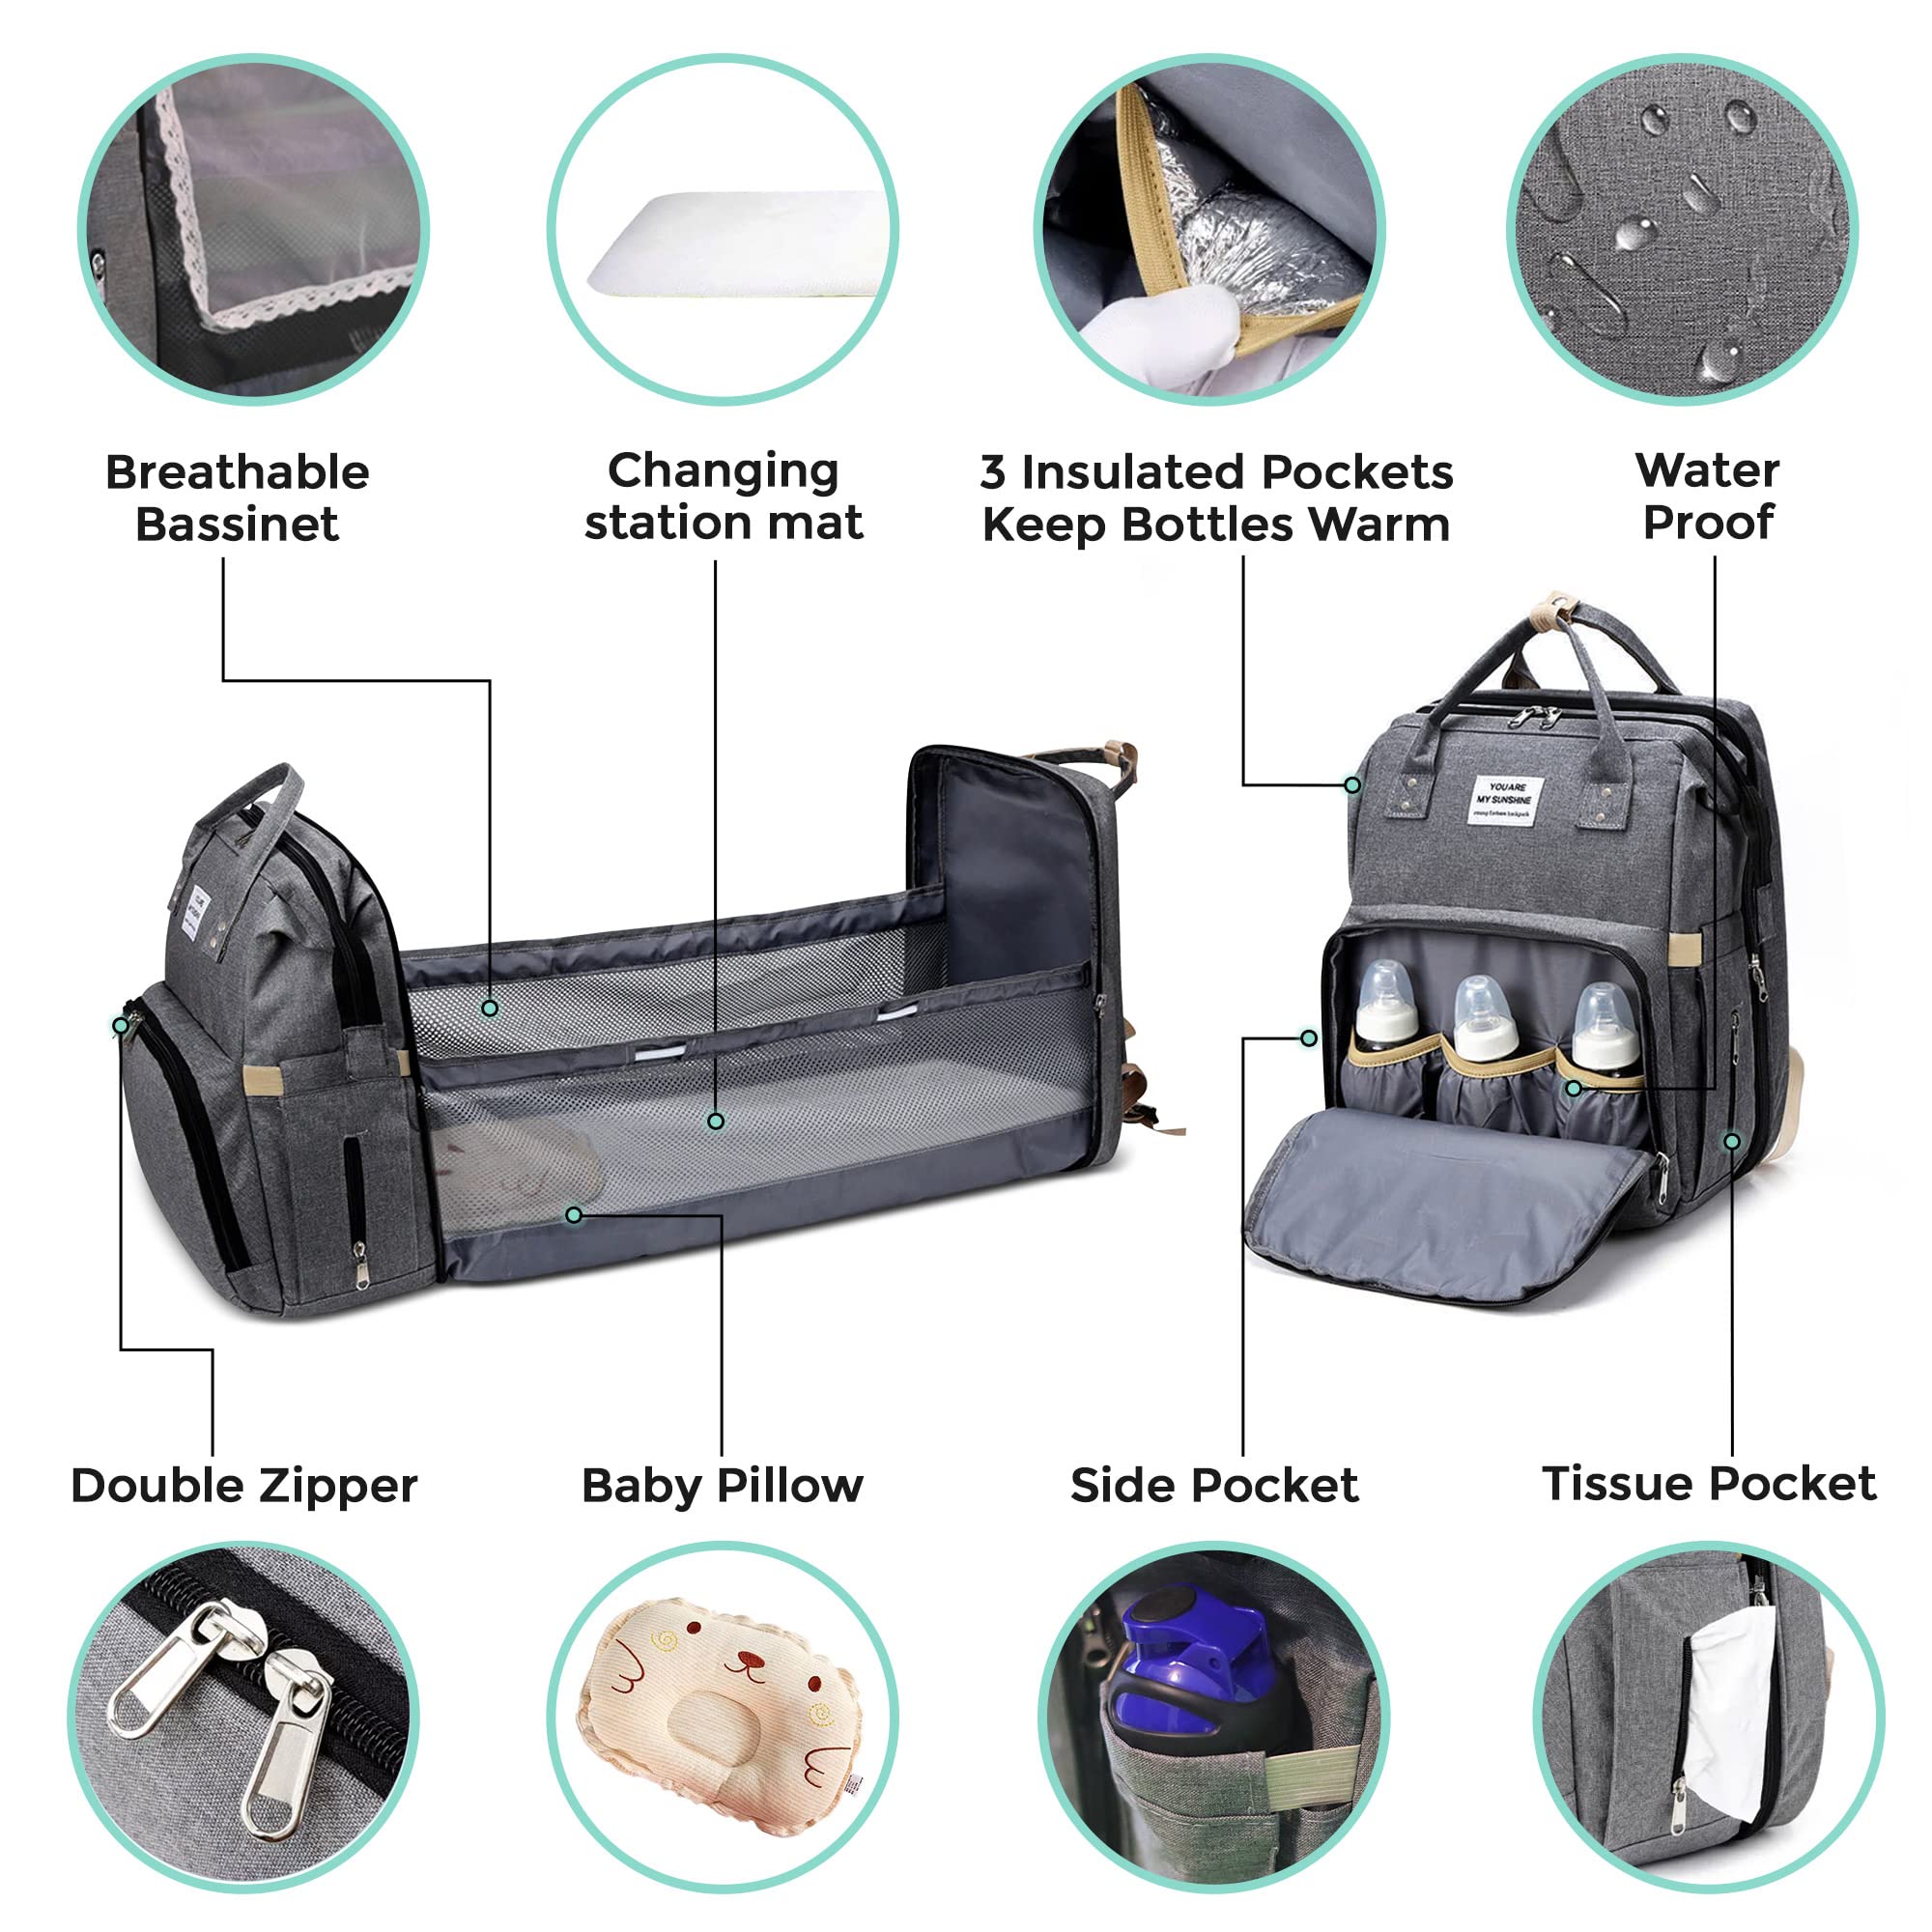 72,300 Baby Bag Images, Stock Photos & Vectors | Shutterstock